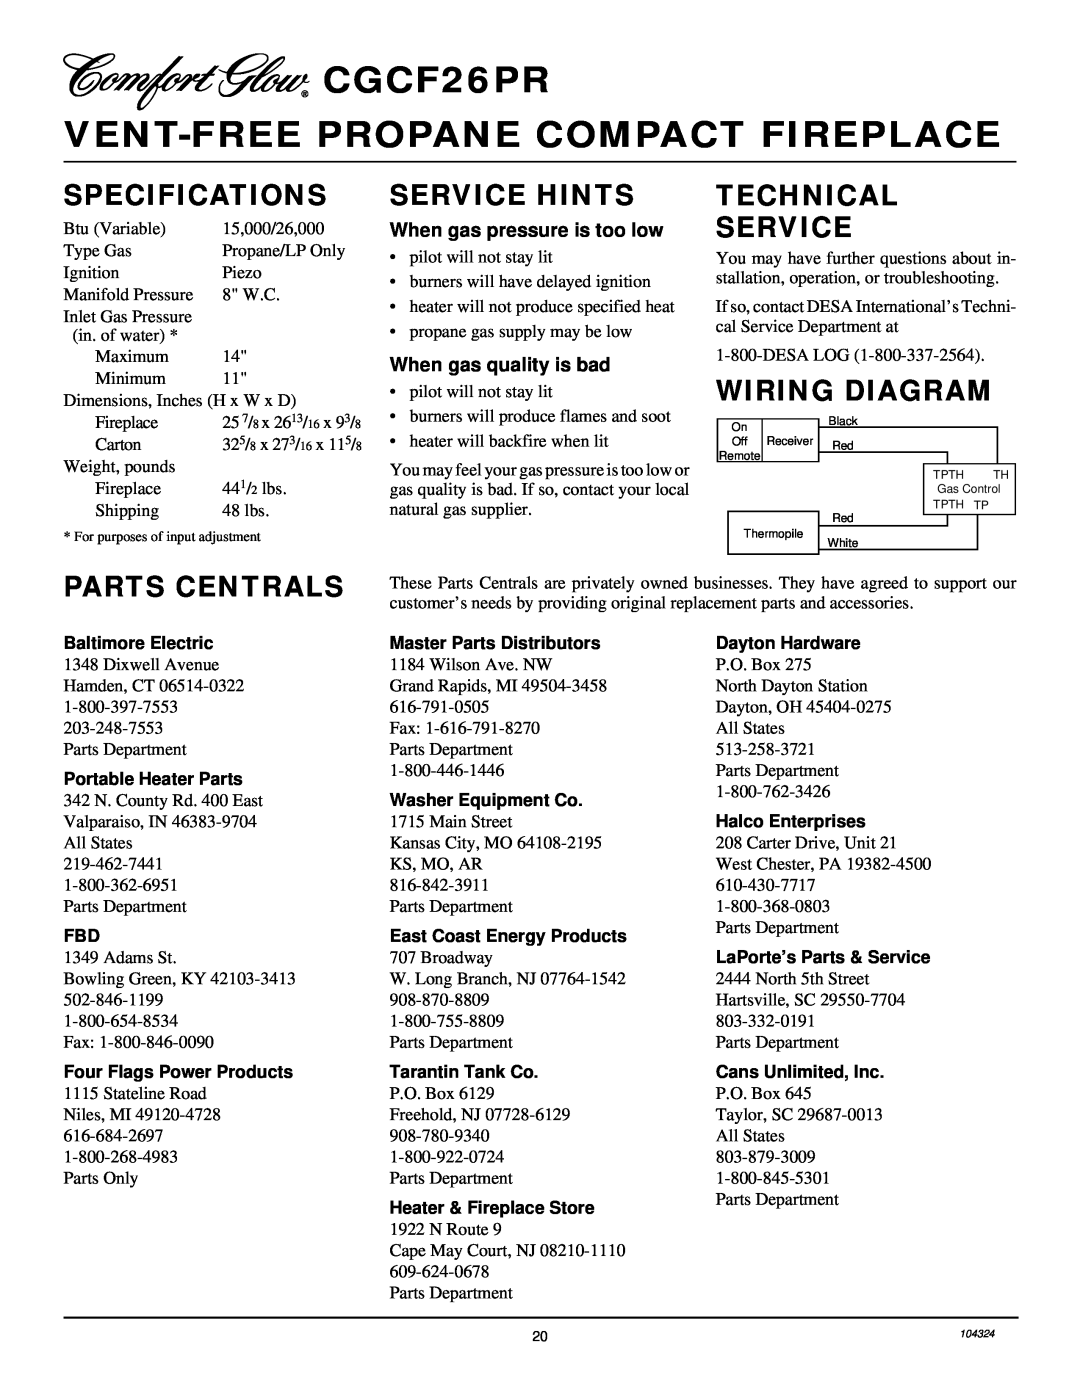 Desa GCF26PR installation manual Specifications, Service Hints, Technical Service, Wiring Diagram, Parts Centrals 